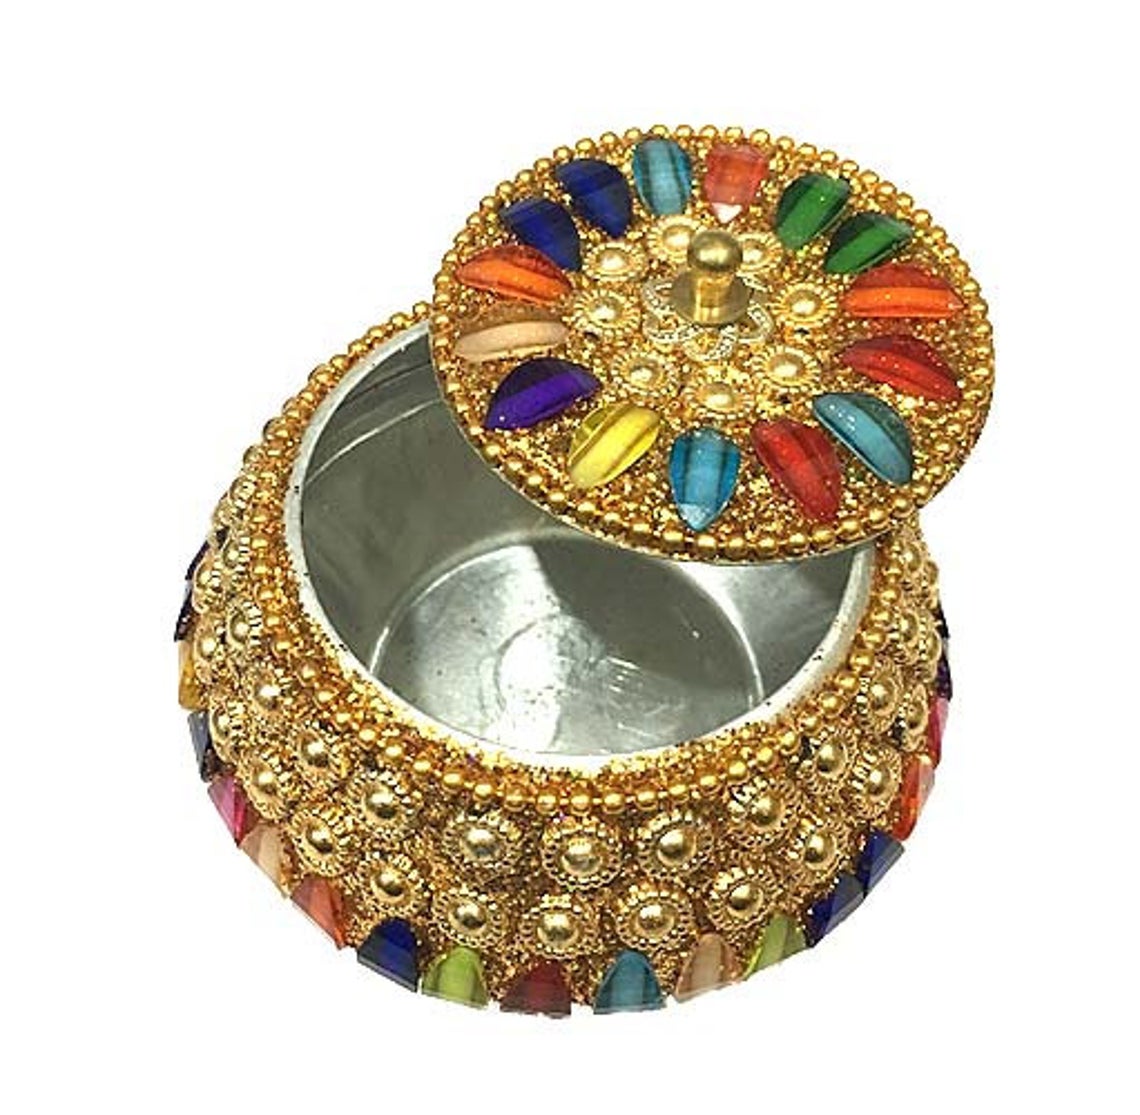 Handmade Decorative Jewellery Box in Handi Shape